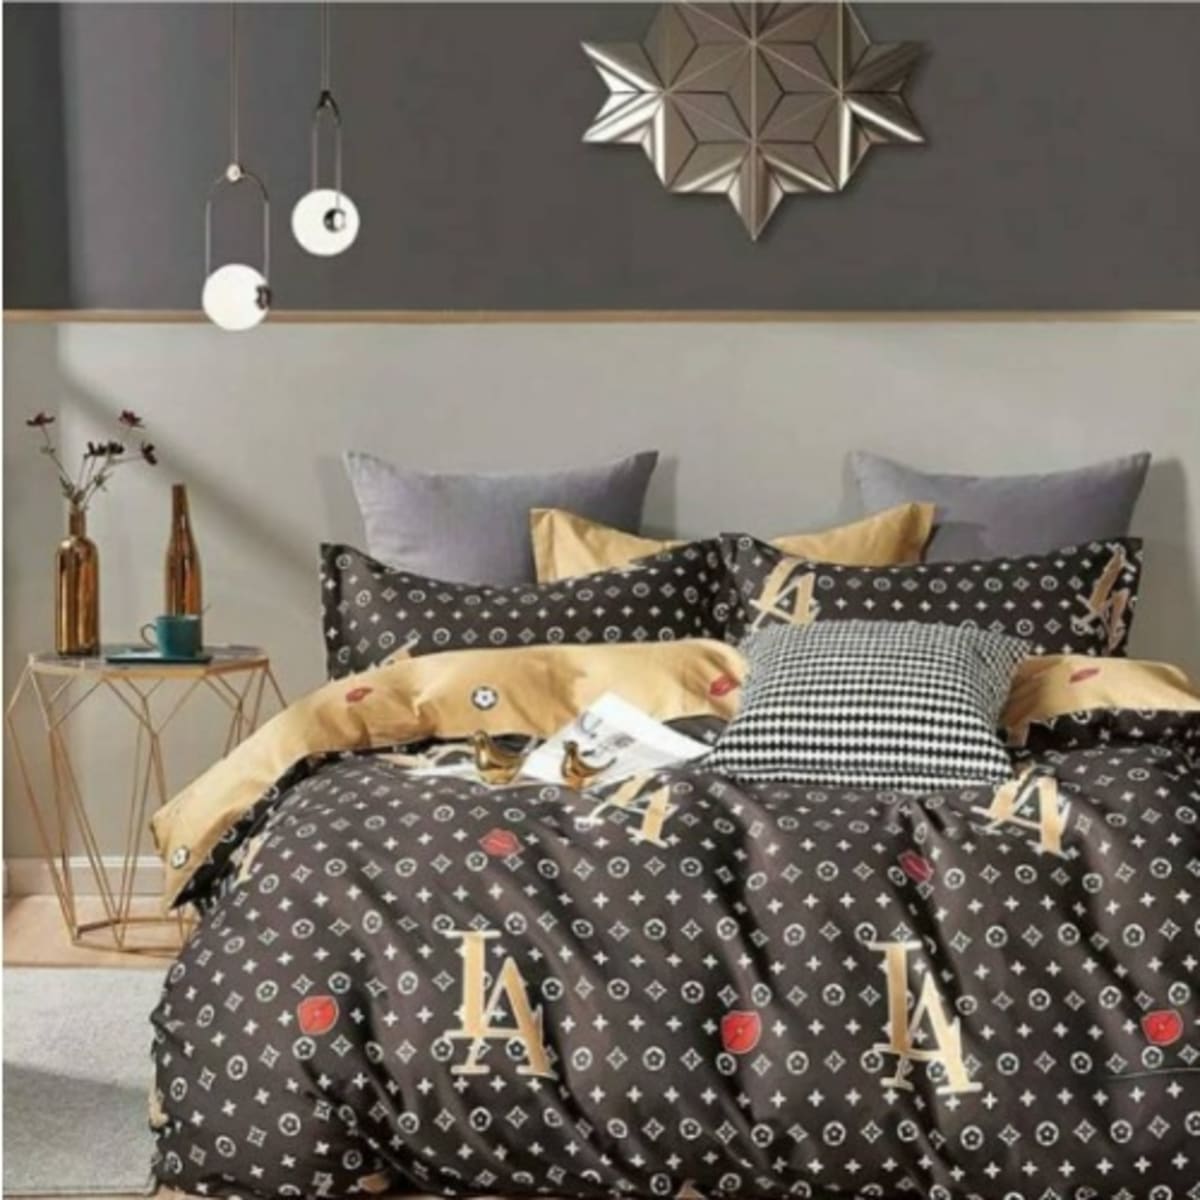 Louis Vuitton Inspired Bedsheet + Duvet And 4 Pillowcases - Brown